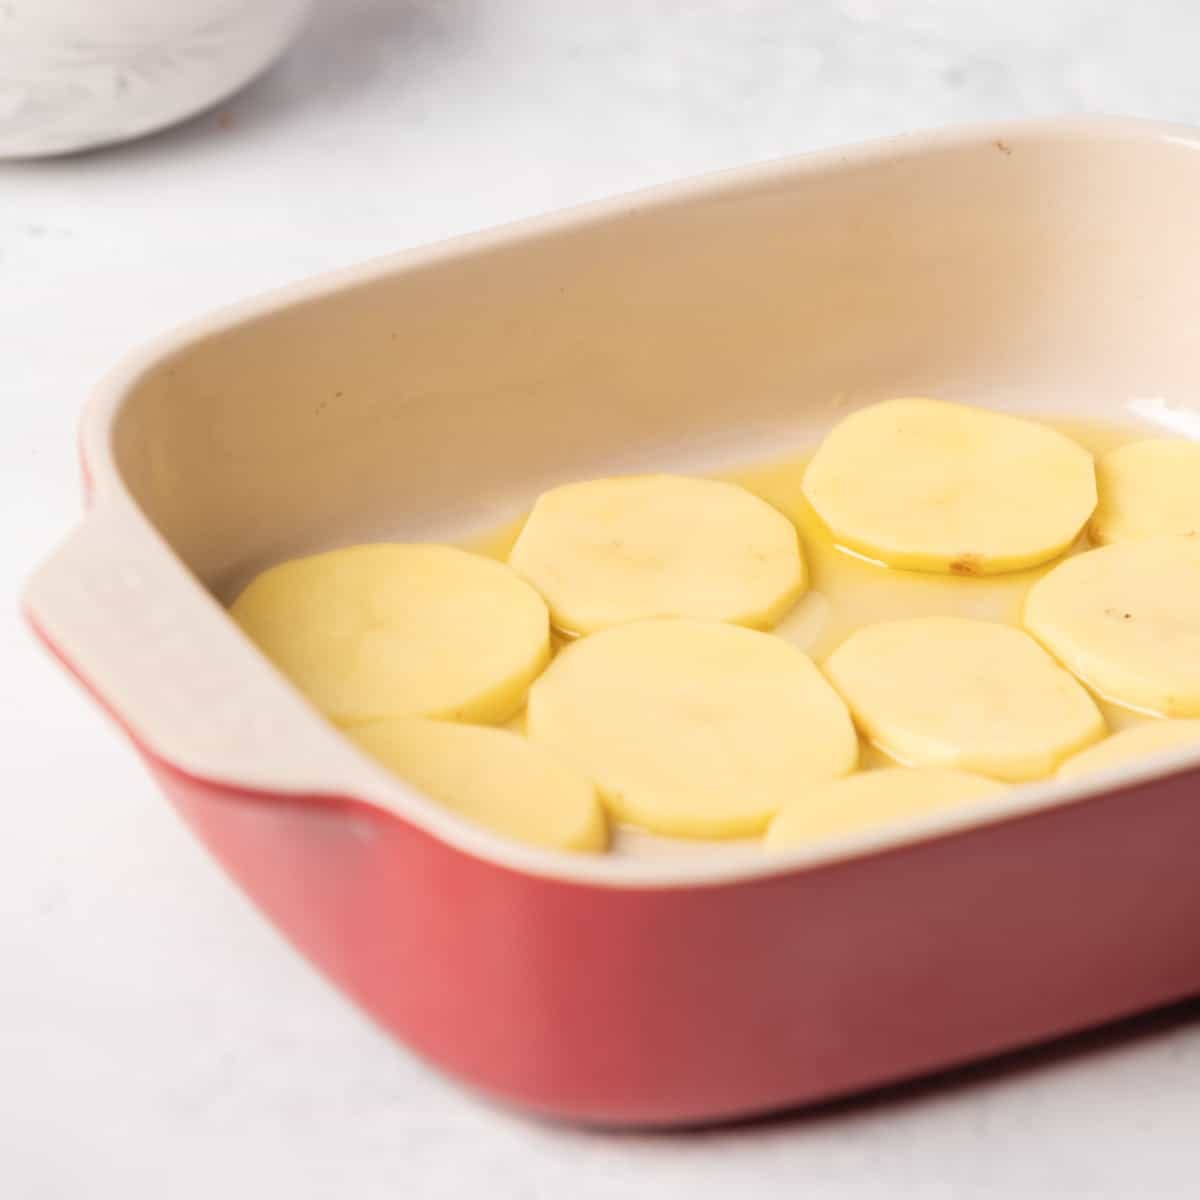 Sliced potatoes layer on bottom of baking dish.